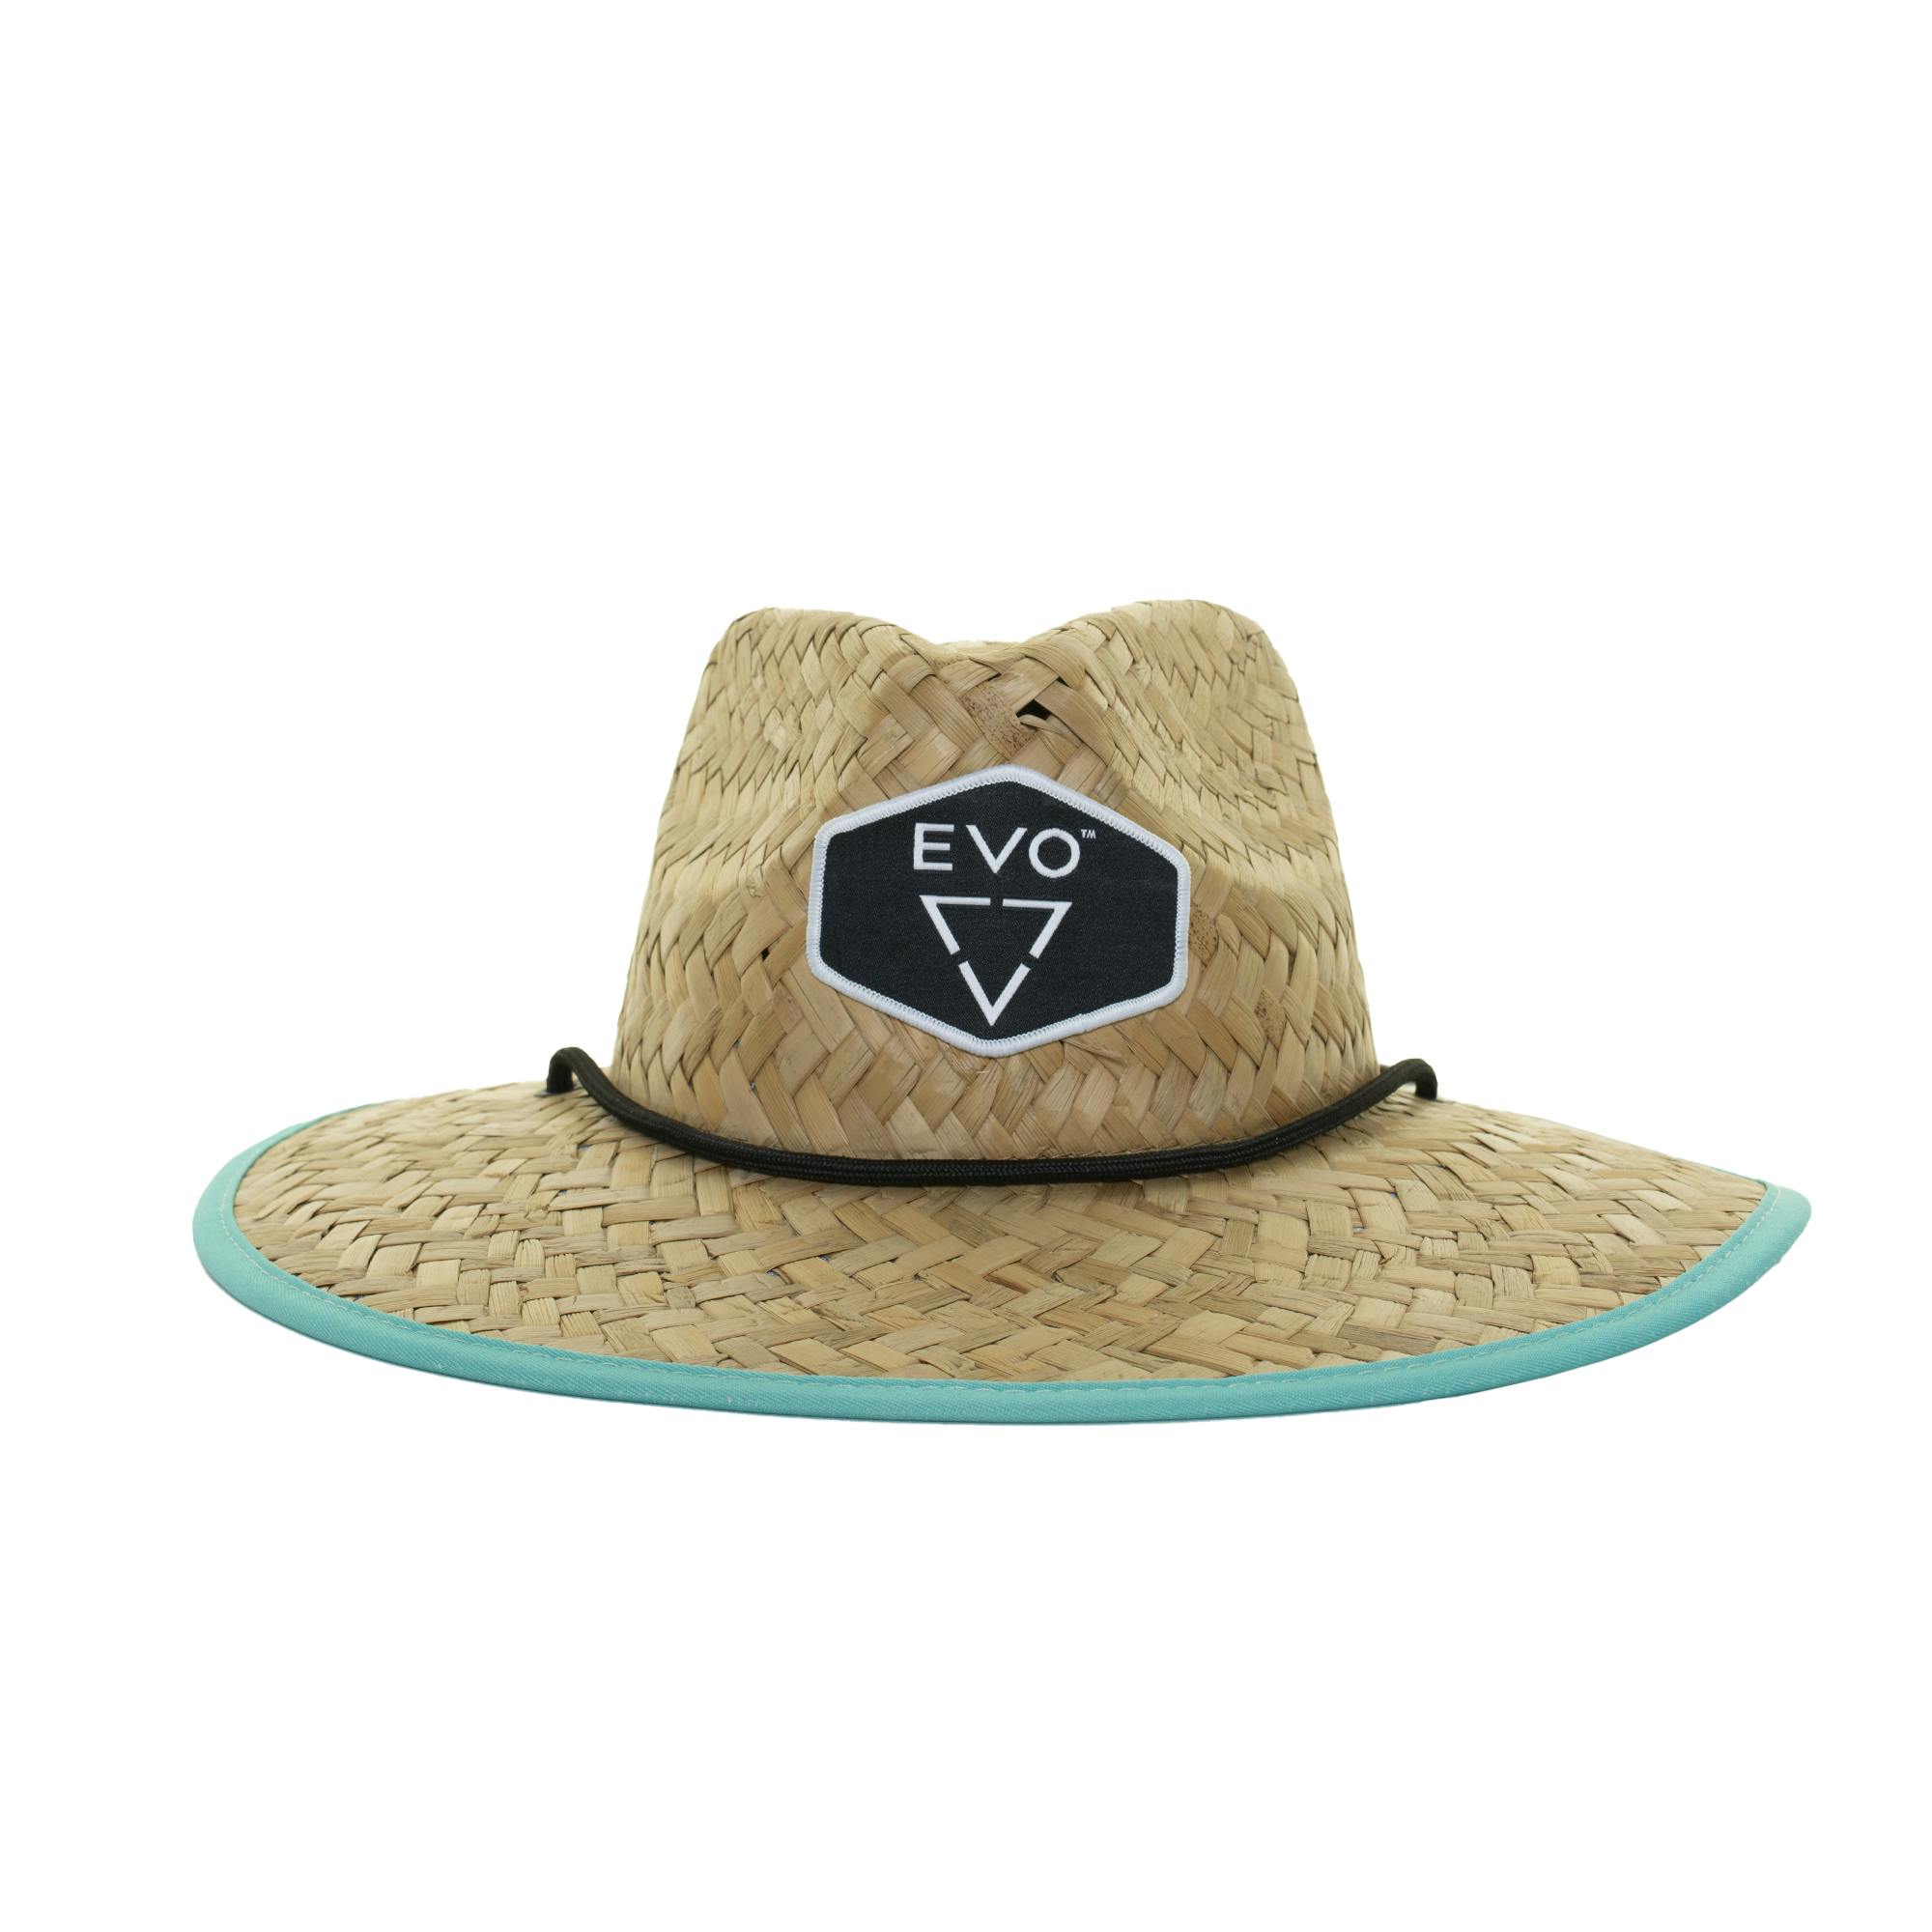 EVO Straw Lifeguard Hat - Jetty Mint (Women's) Front View